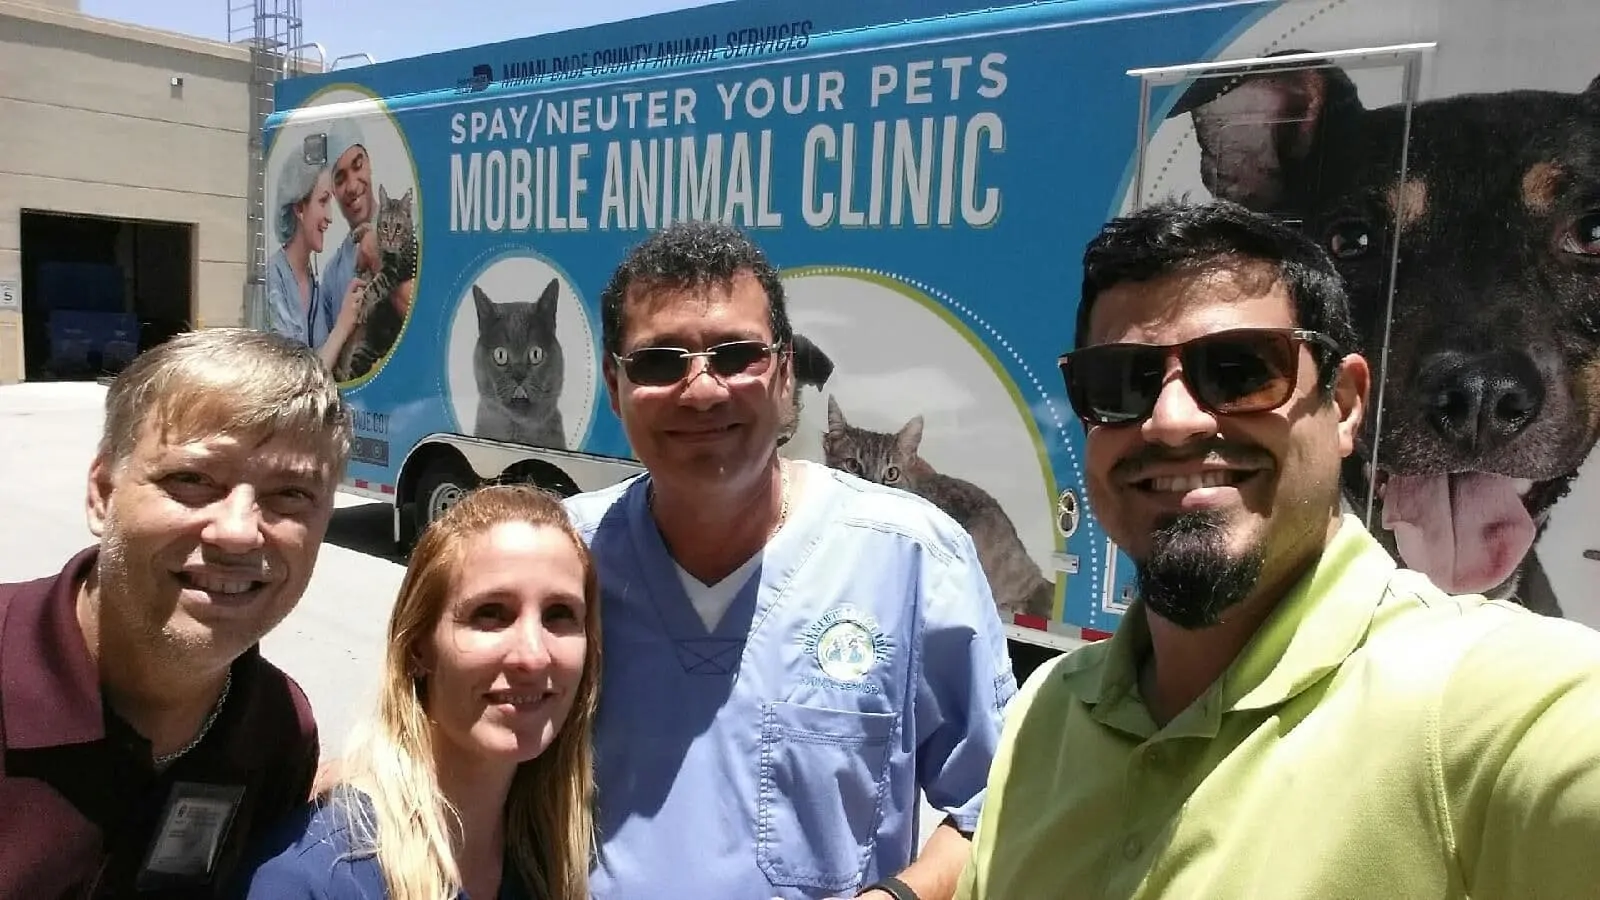 With vet technician staff of Miami Veterinary Foundation